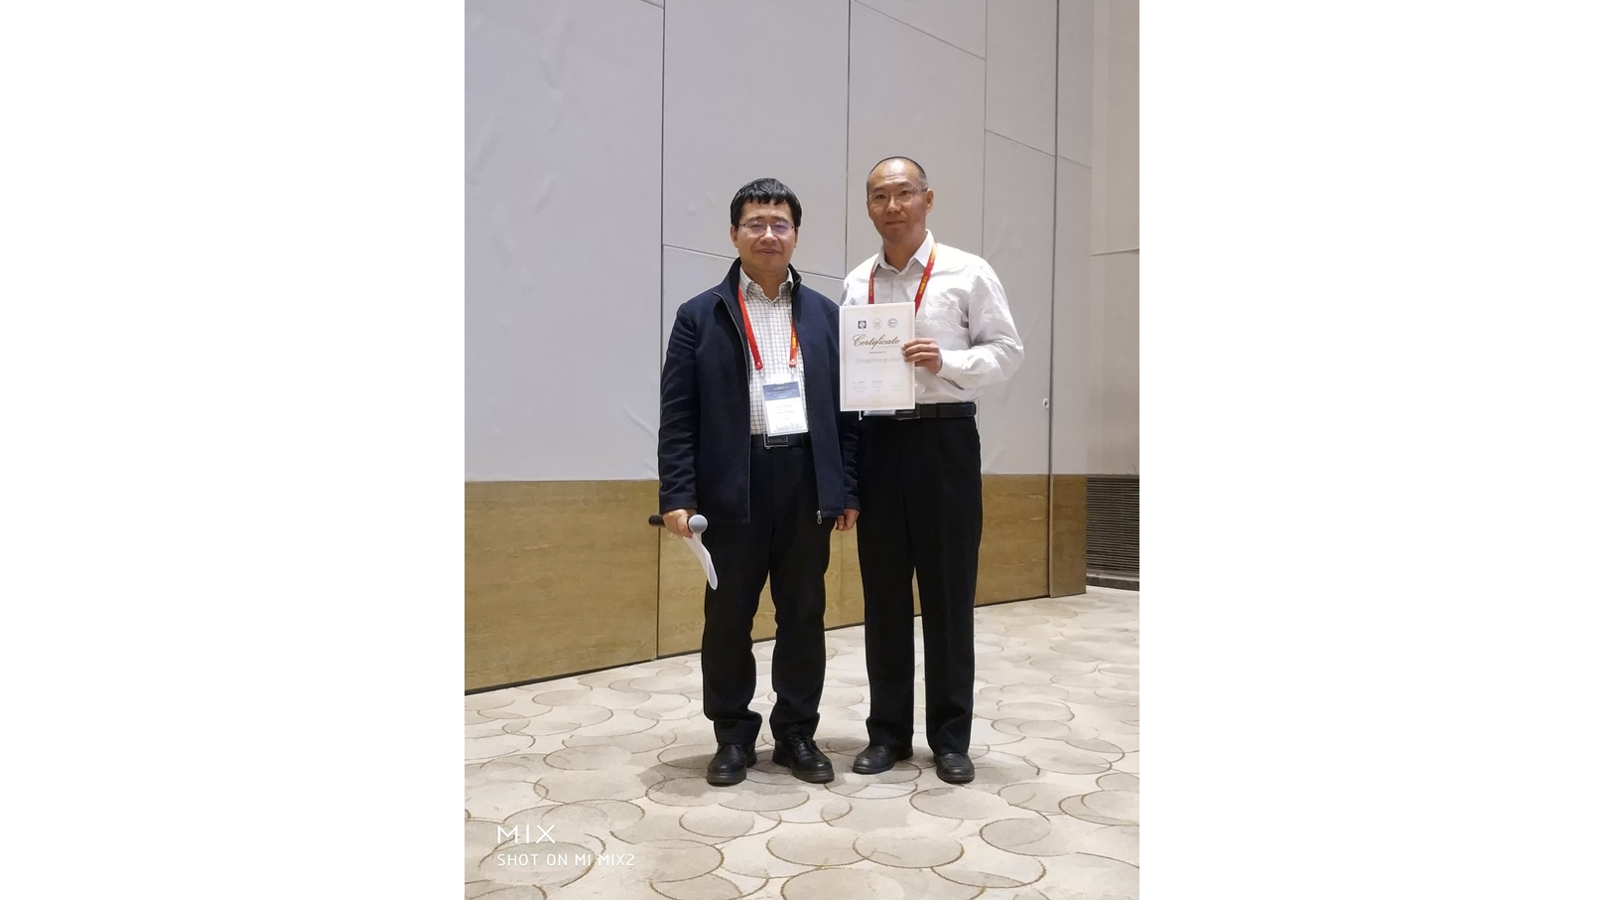 AsiaNANO 2018 (Asian Conference on Nanoscience and Nanotechnology)